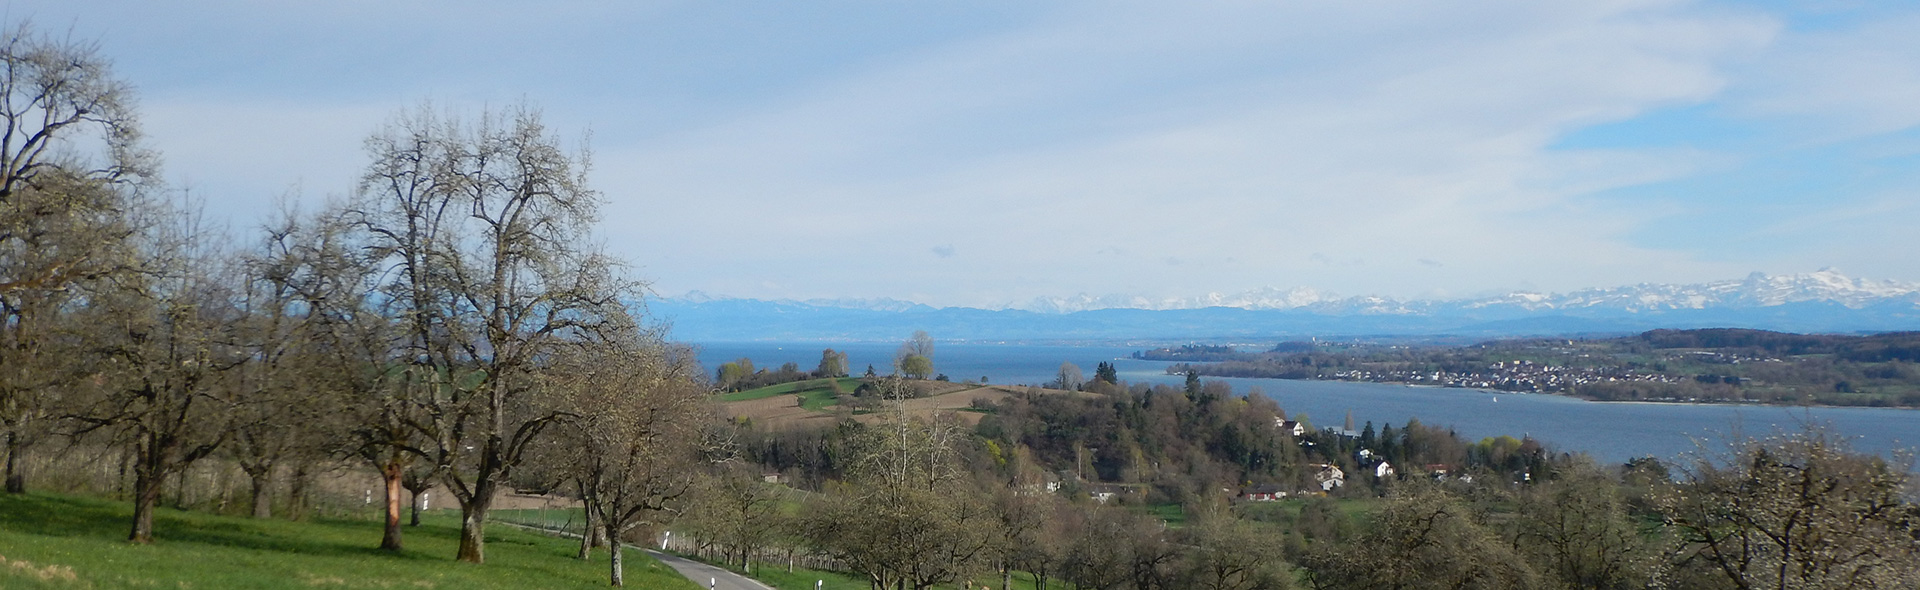 Lake Constance, View from Hödingen near Überlingen